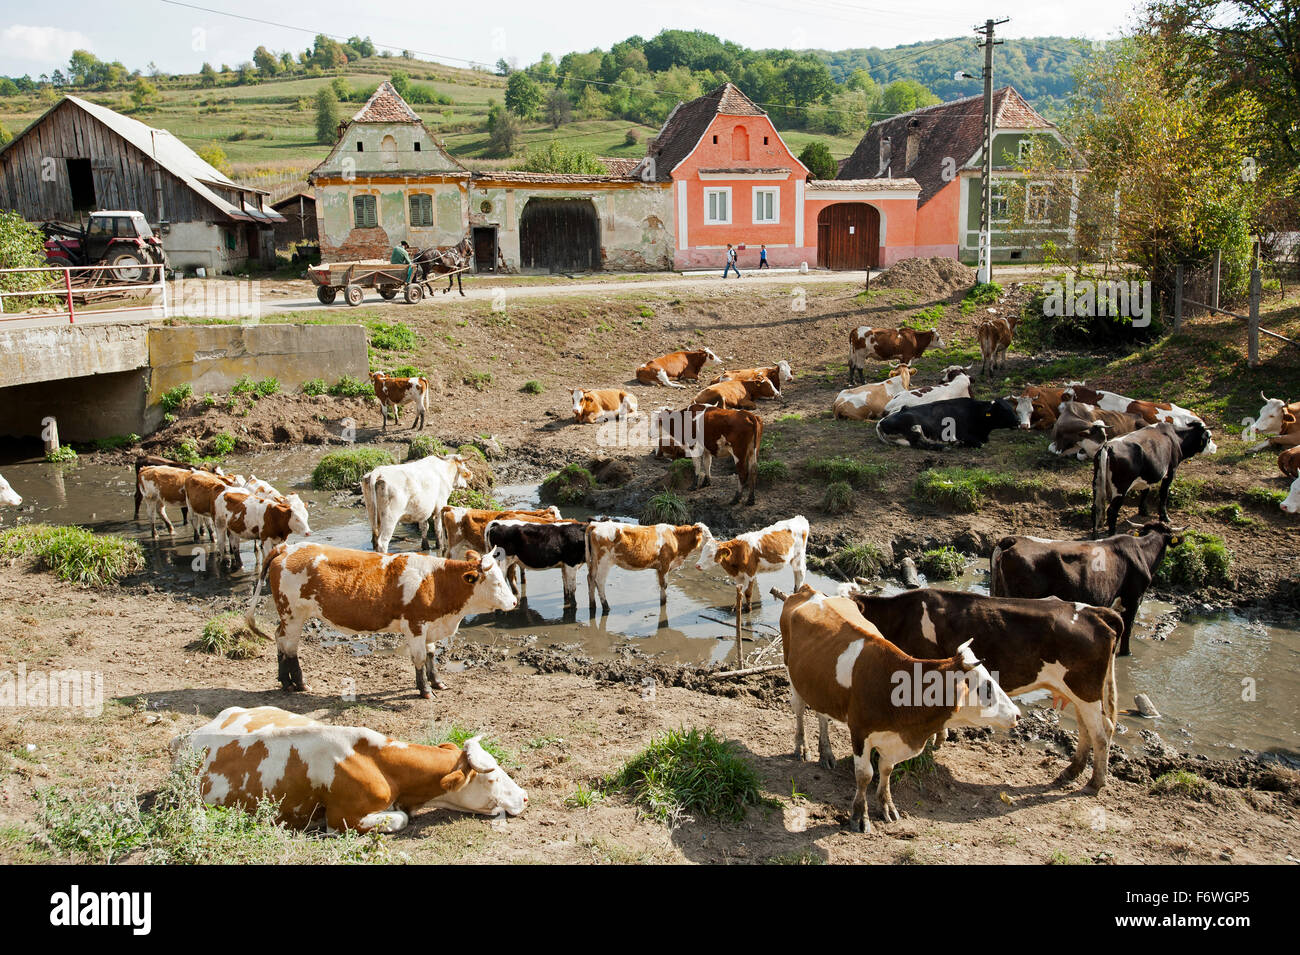 The village of Valchid, Transylvania, Romania Stock Photo